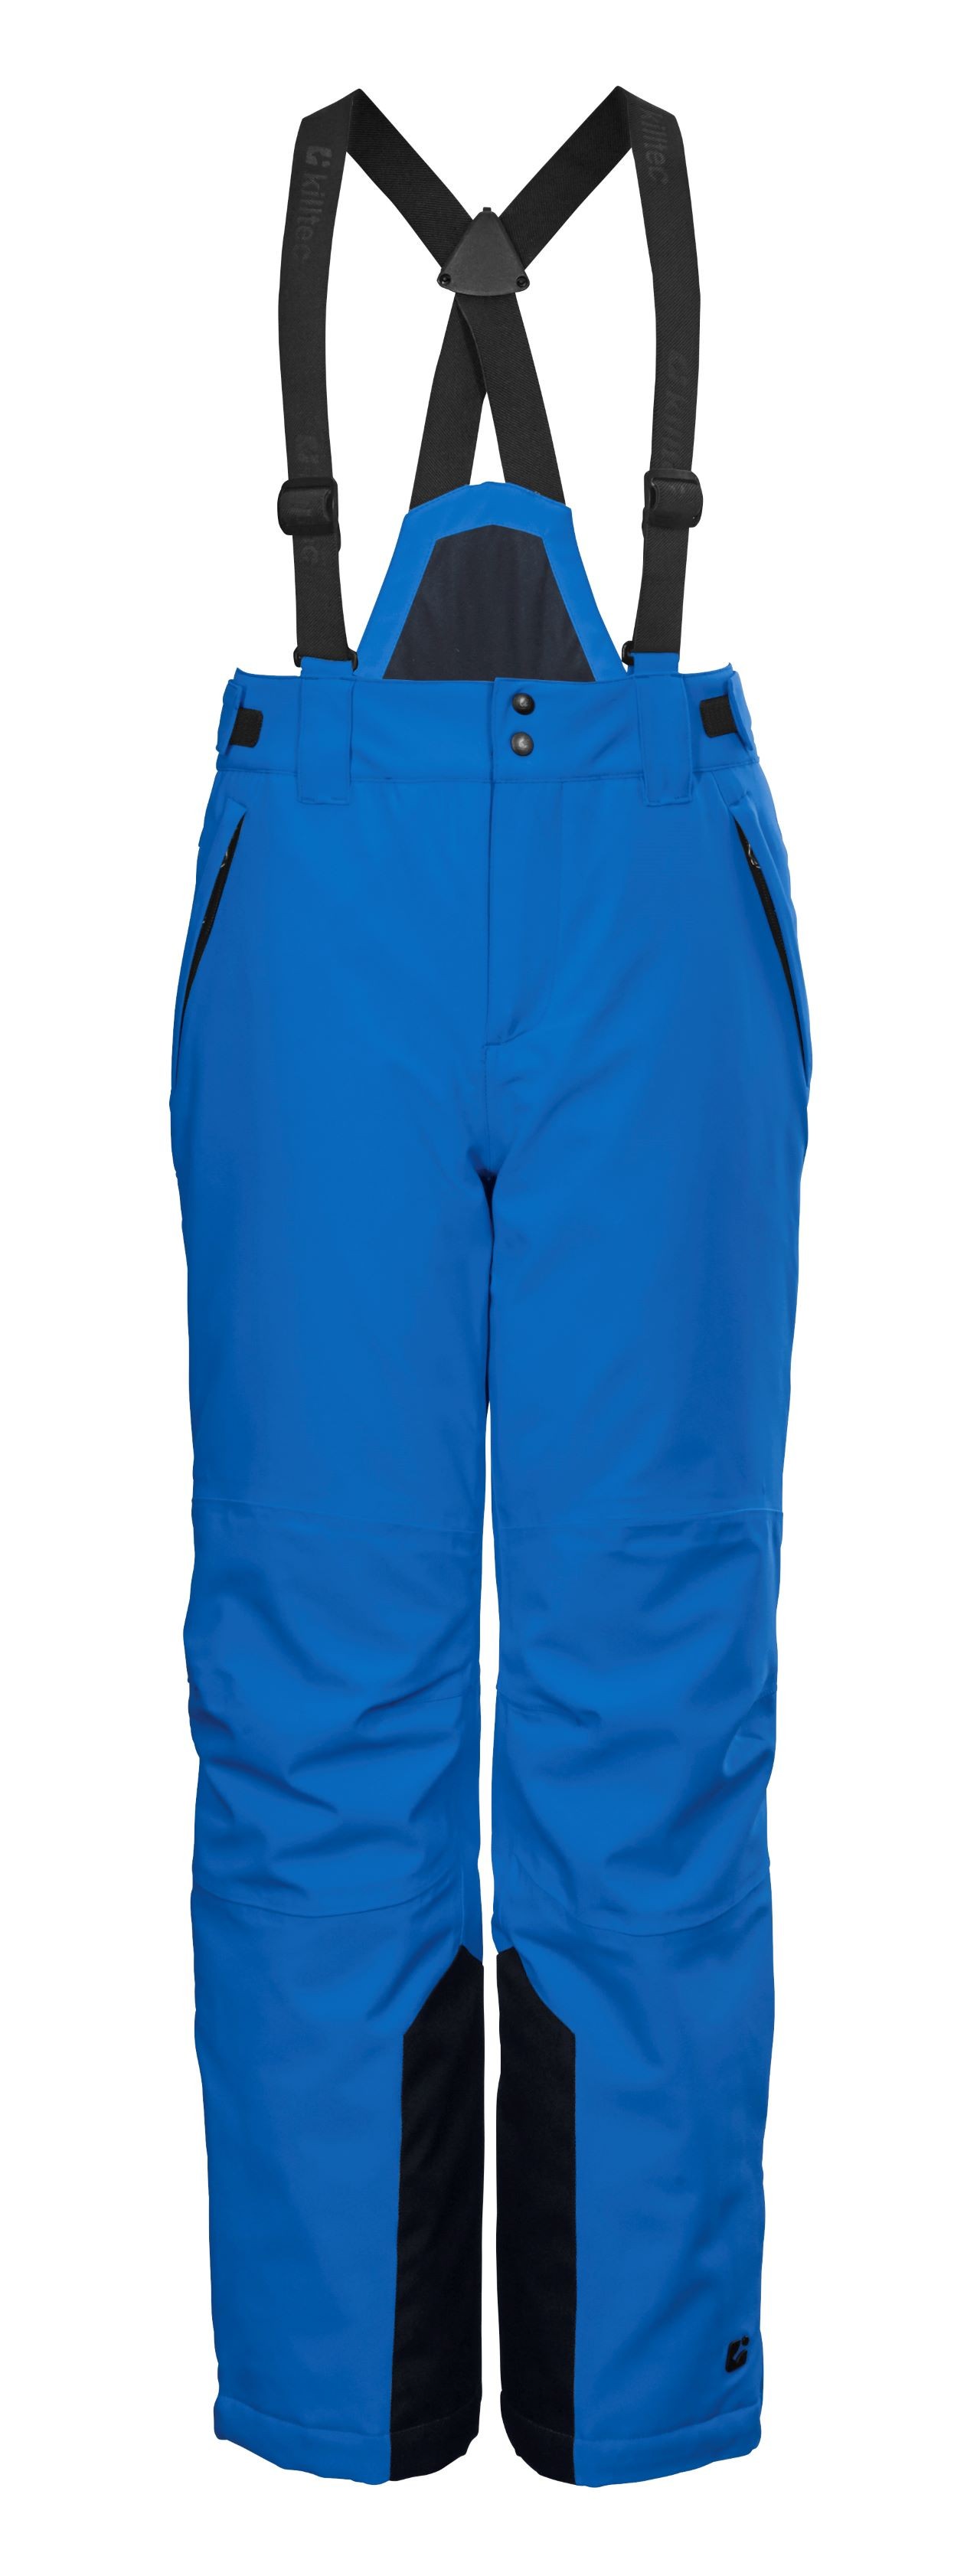 Pantaloni KSW 79 BYS SKI PNTS 176 royal blue